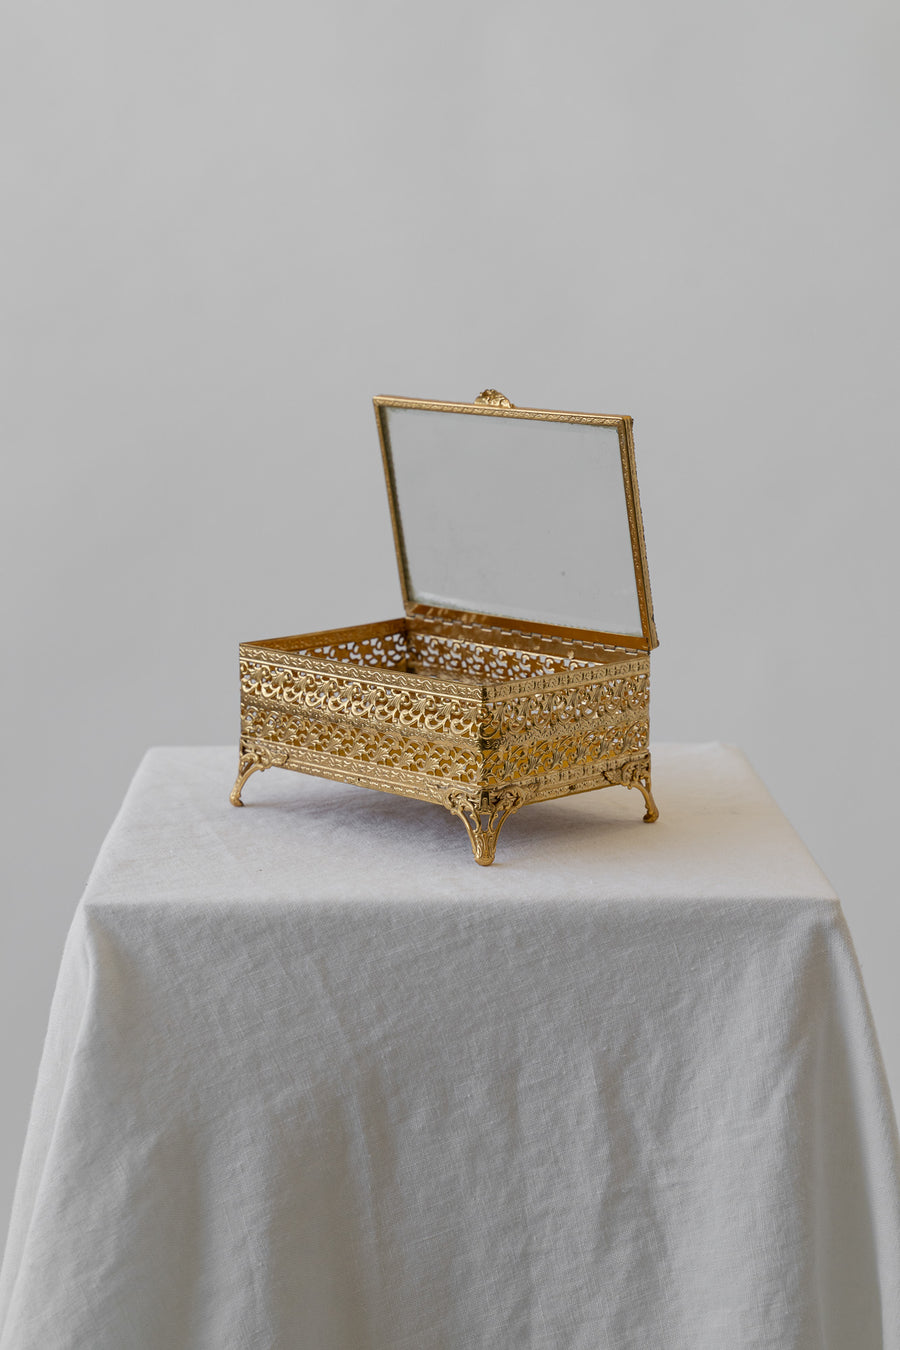 Antique Brass Jewelry Box